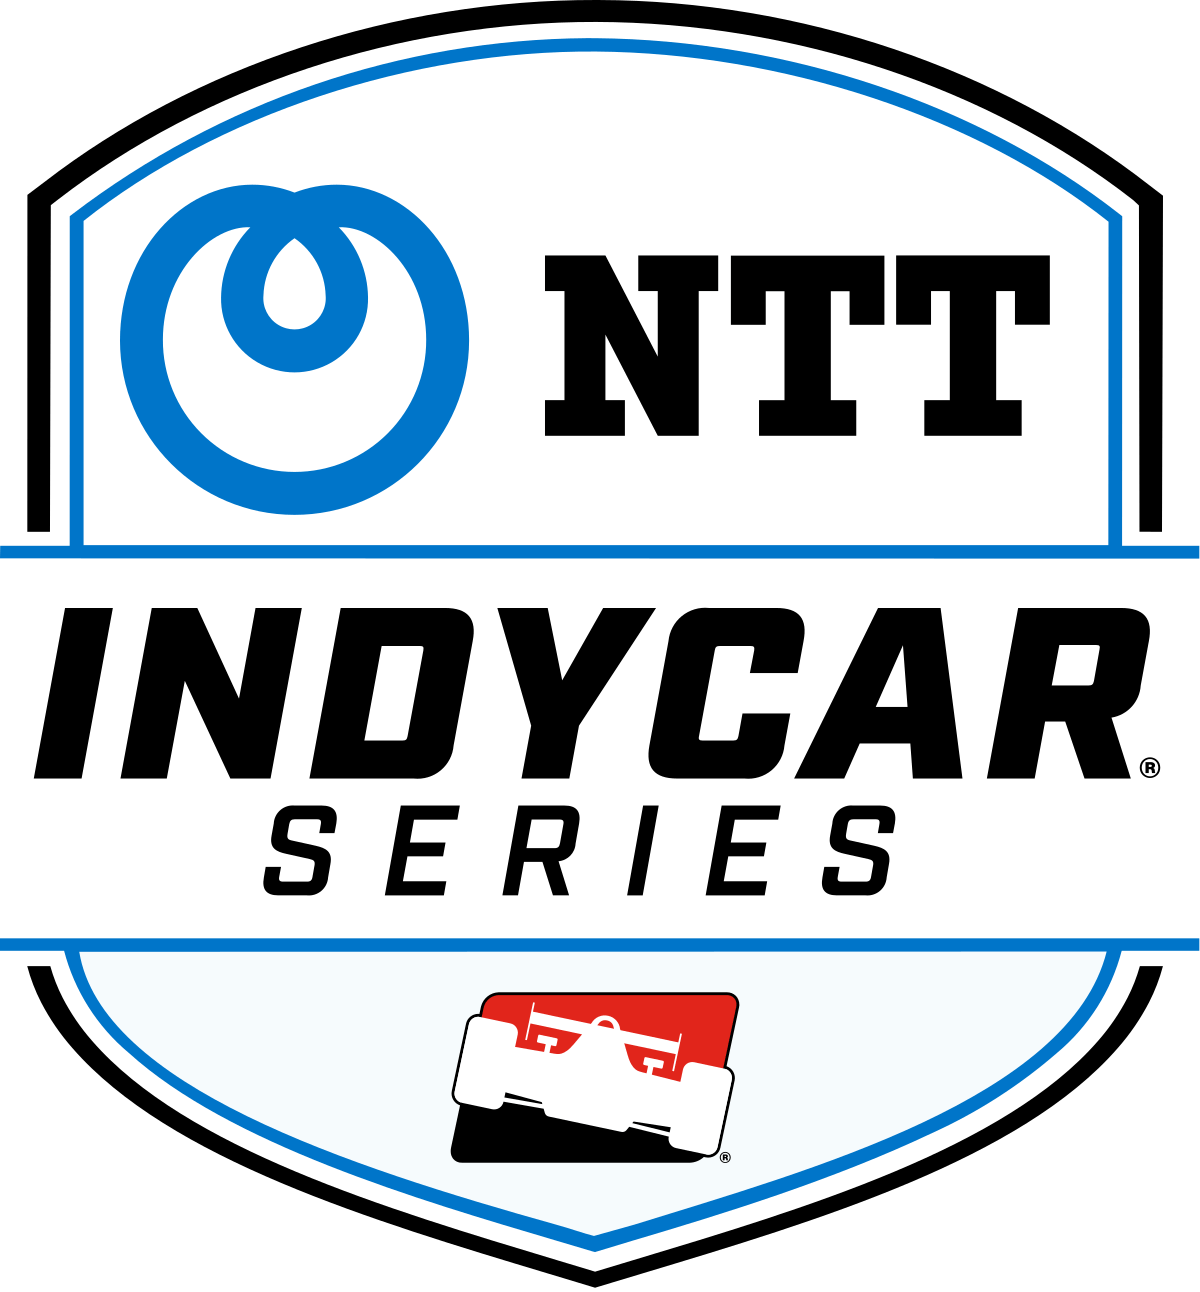 Automotive Racing Logo - 2019 IndyCar Series